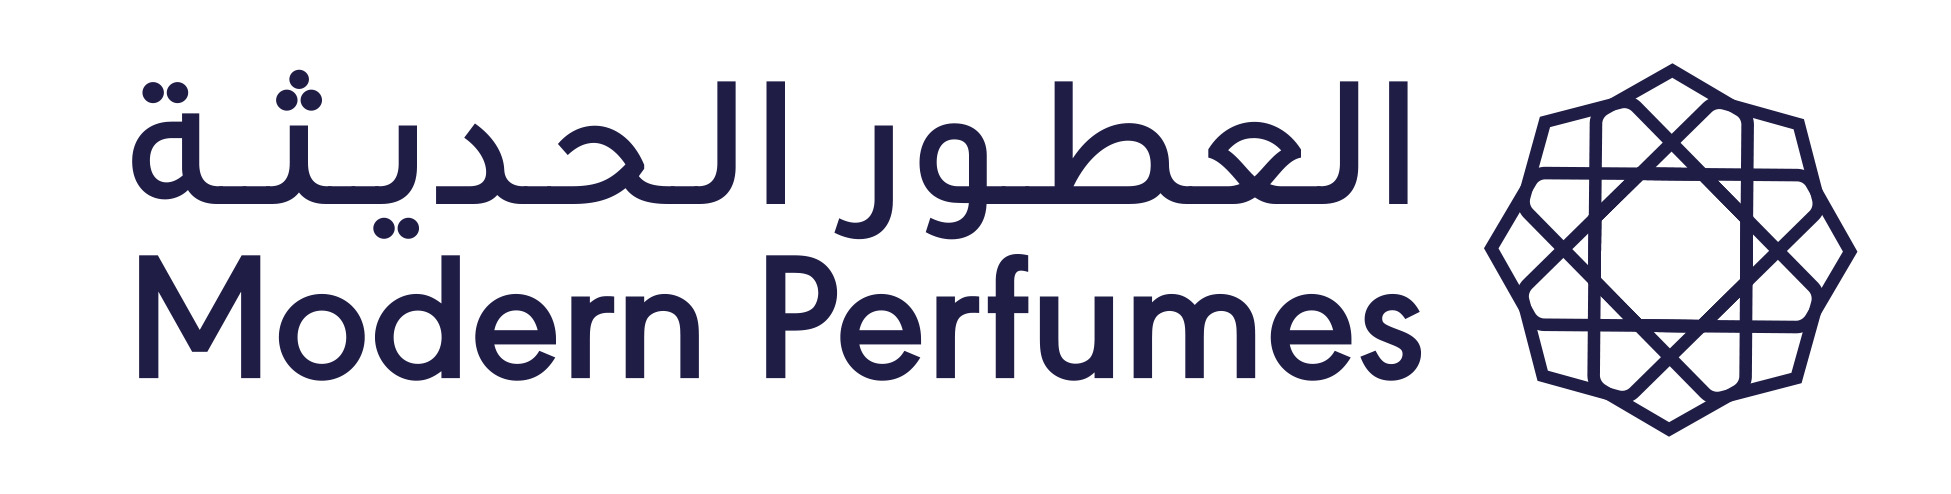 Modern Perfume Co.